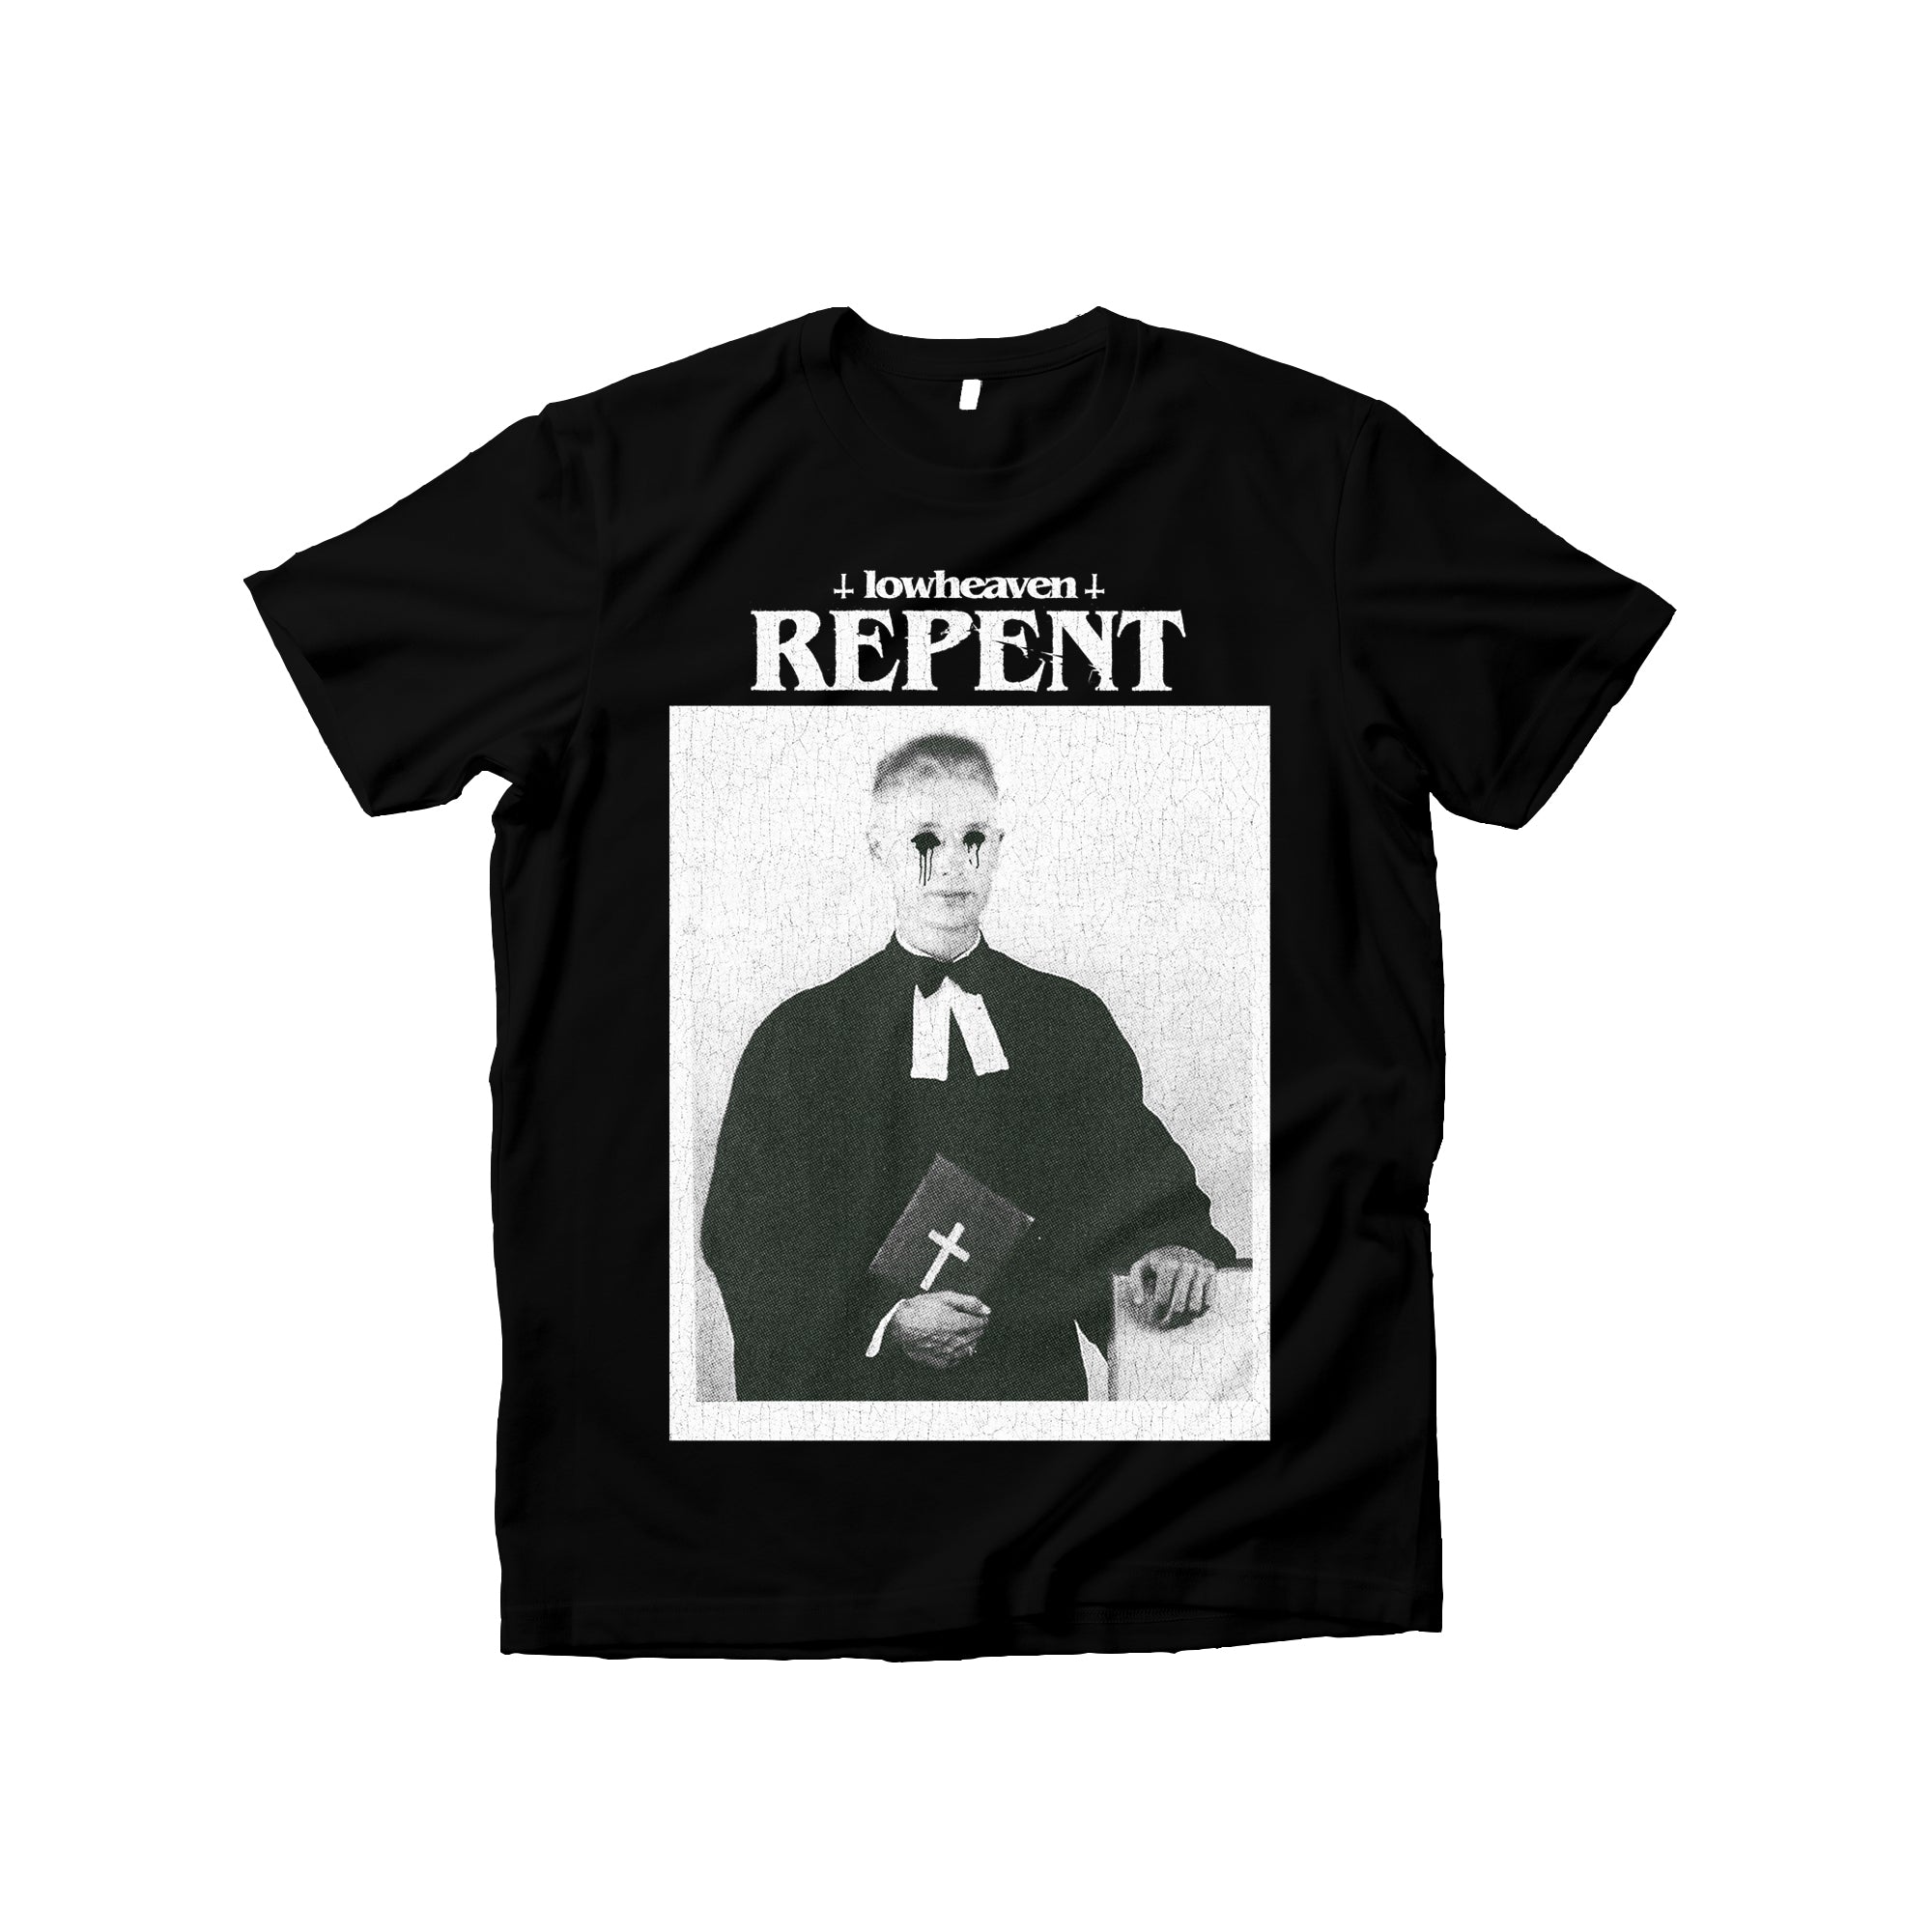 lowheaven - repent T-shirt